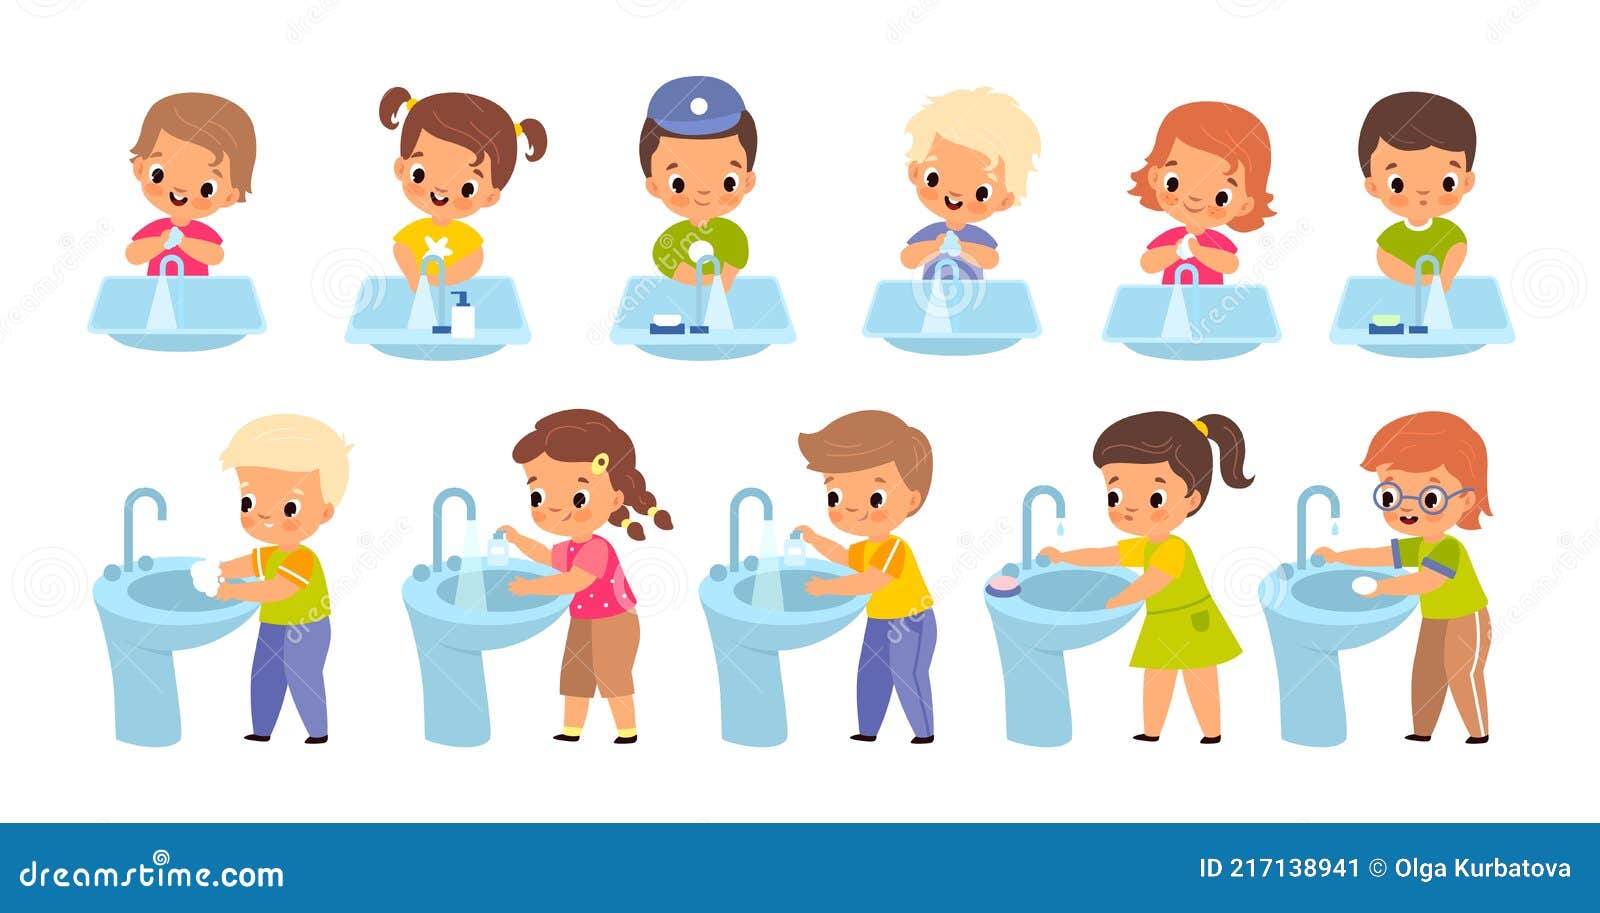 Kids Washing Face And Hand Vector Illustration | CartoonDealer.com